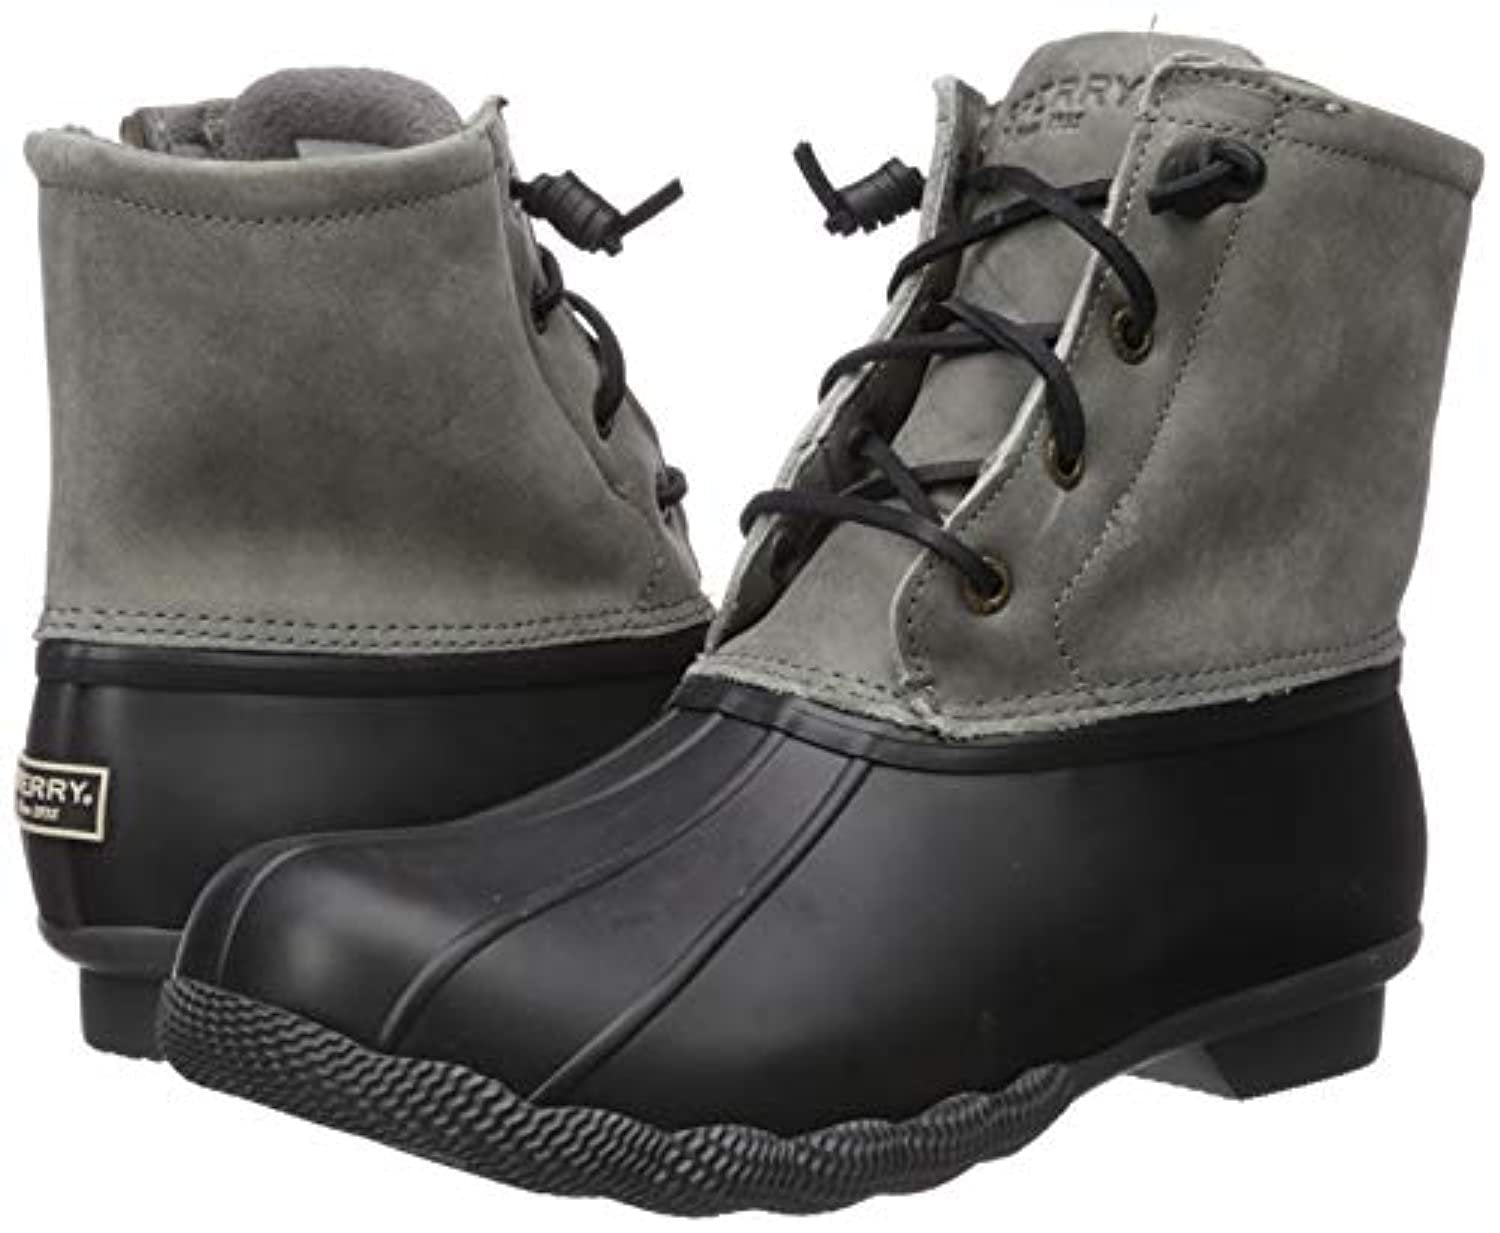 Sperry womens Top-sider Women's Saltwater Rain Boots, Black/Grey, 7.5 US